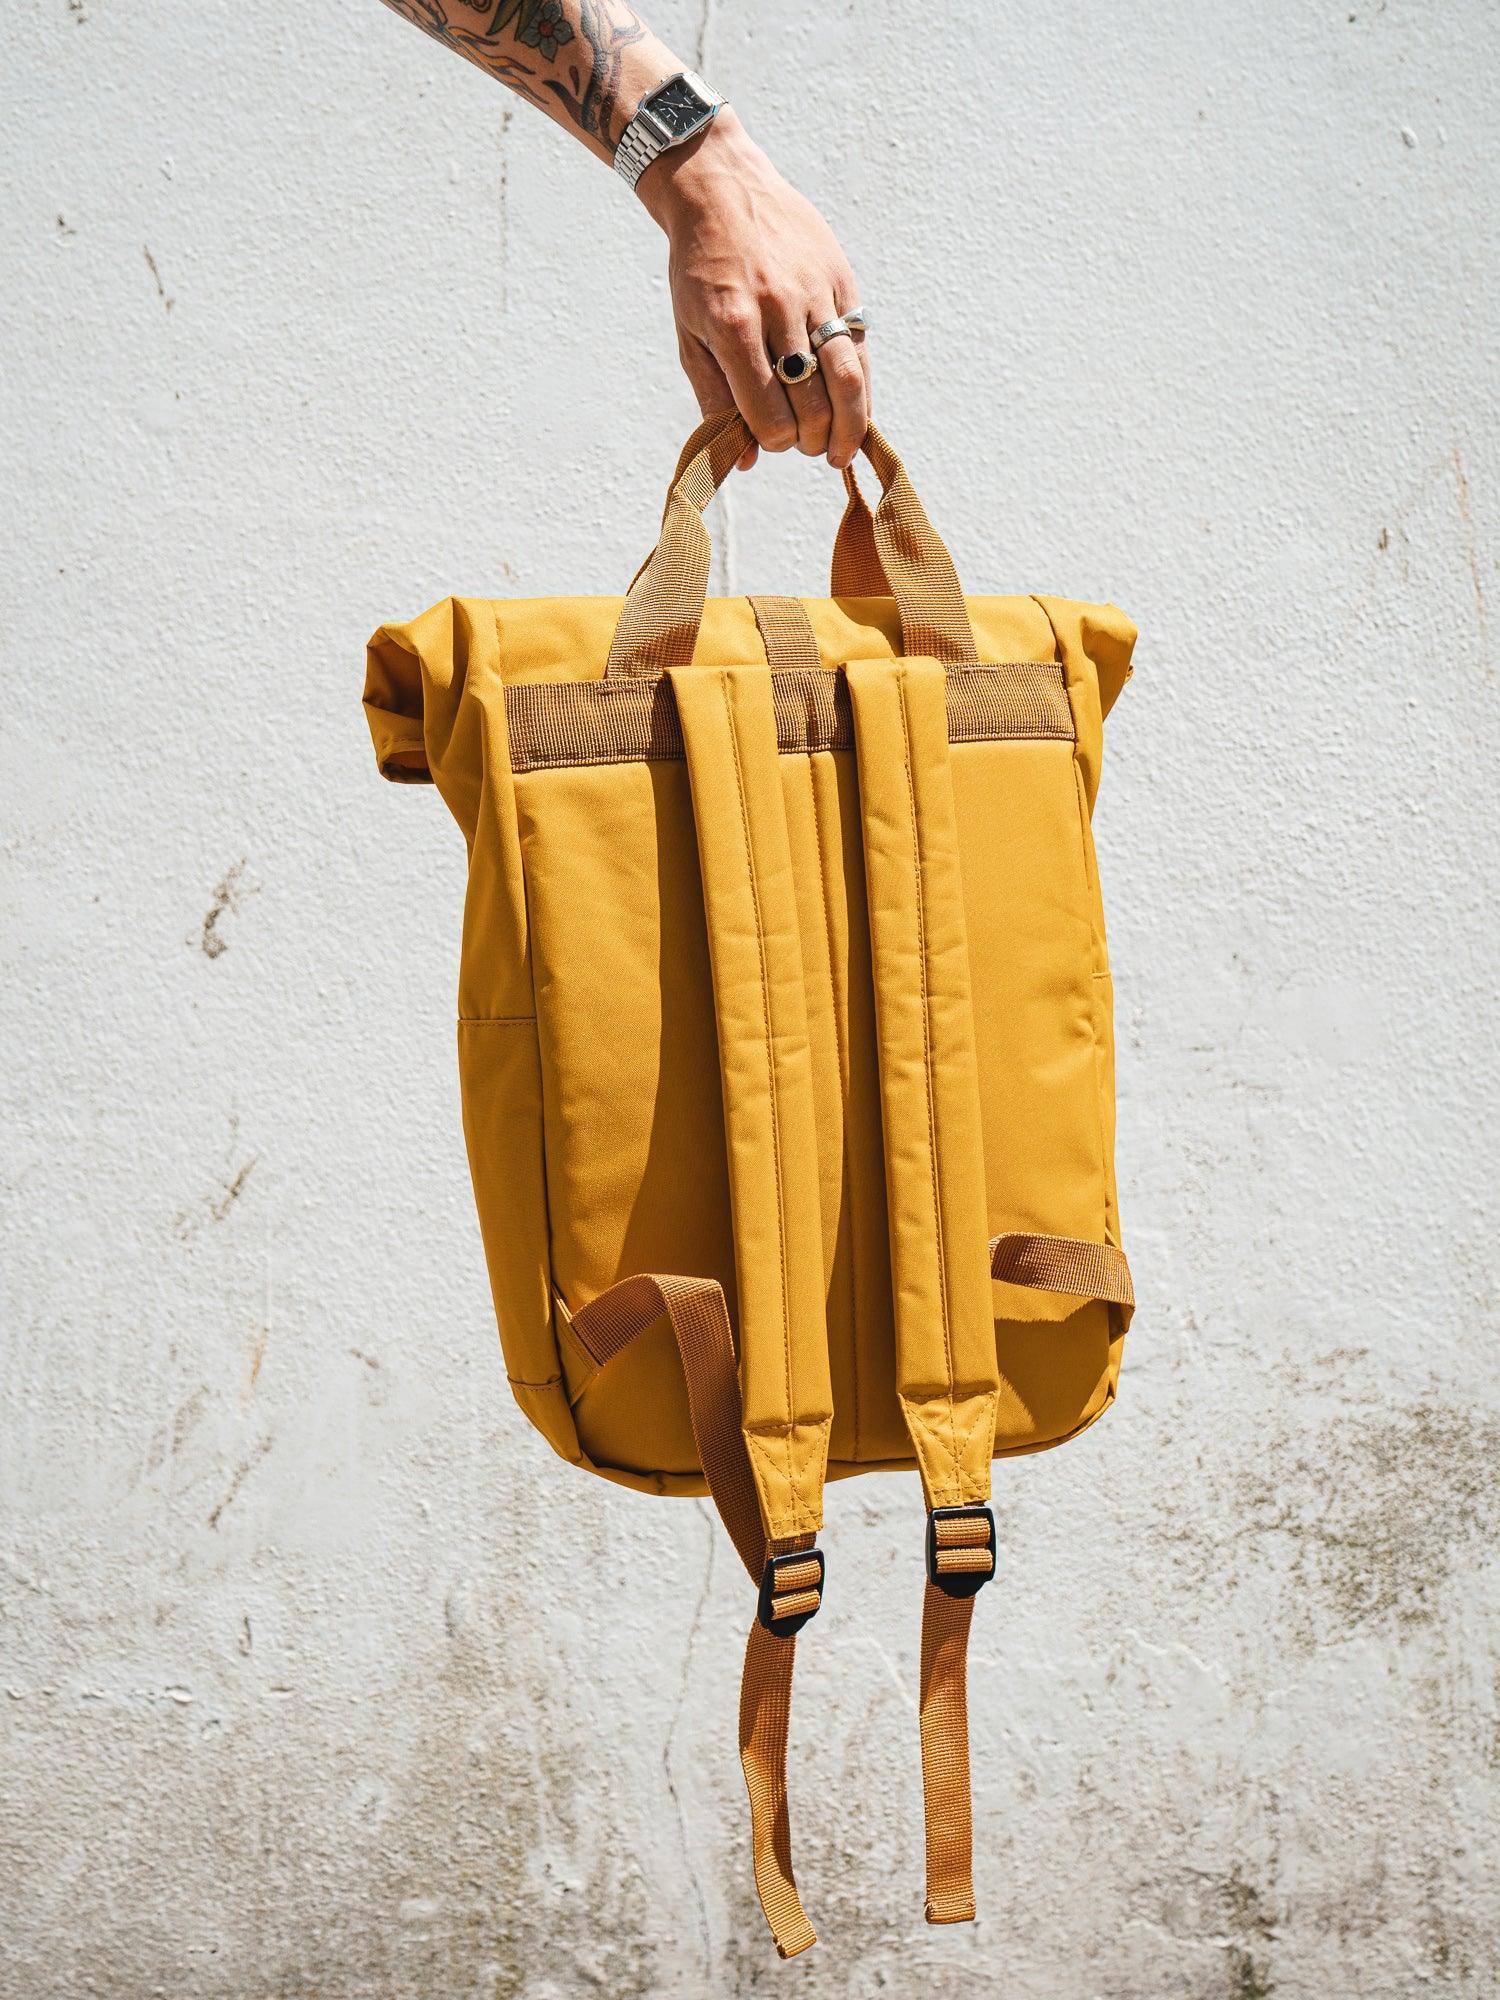 Shelter Backpack - Mustard.